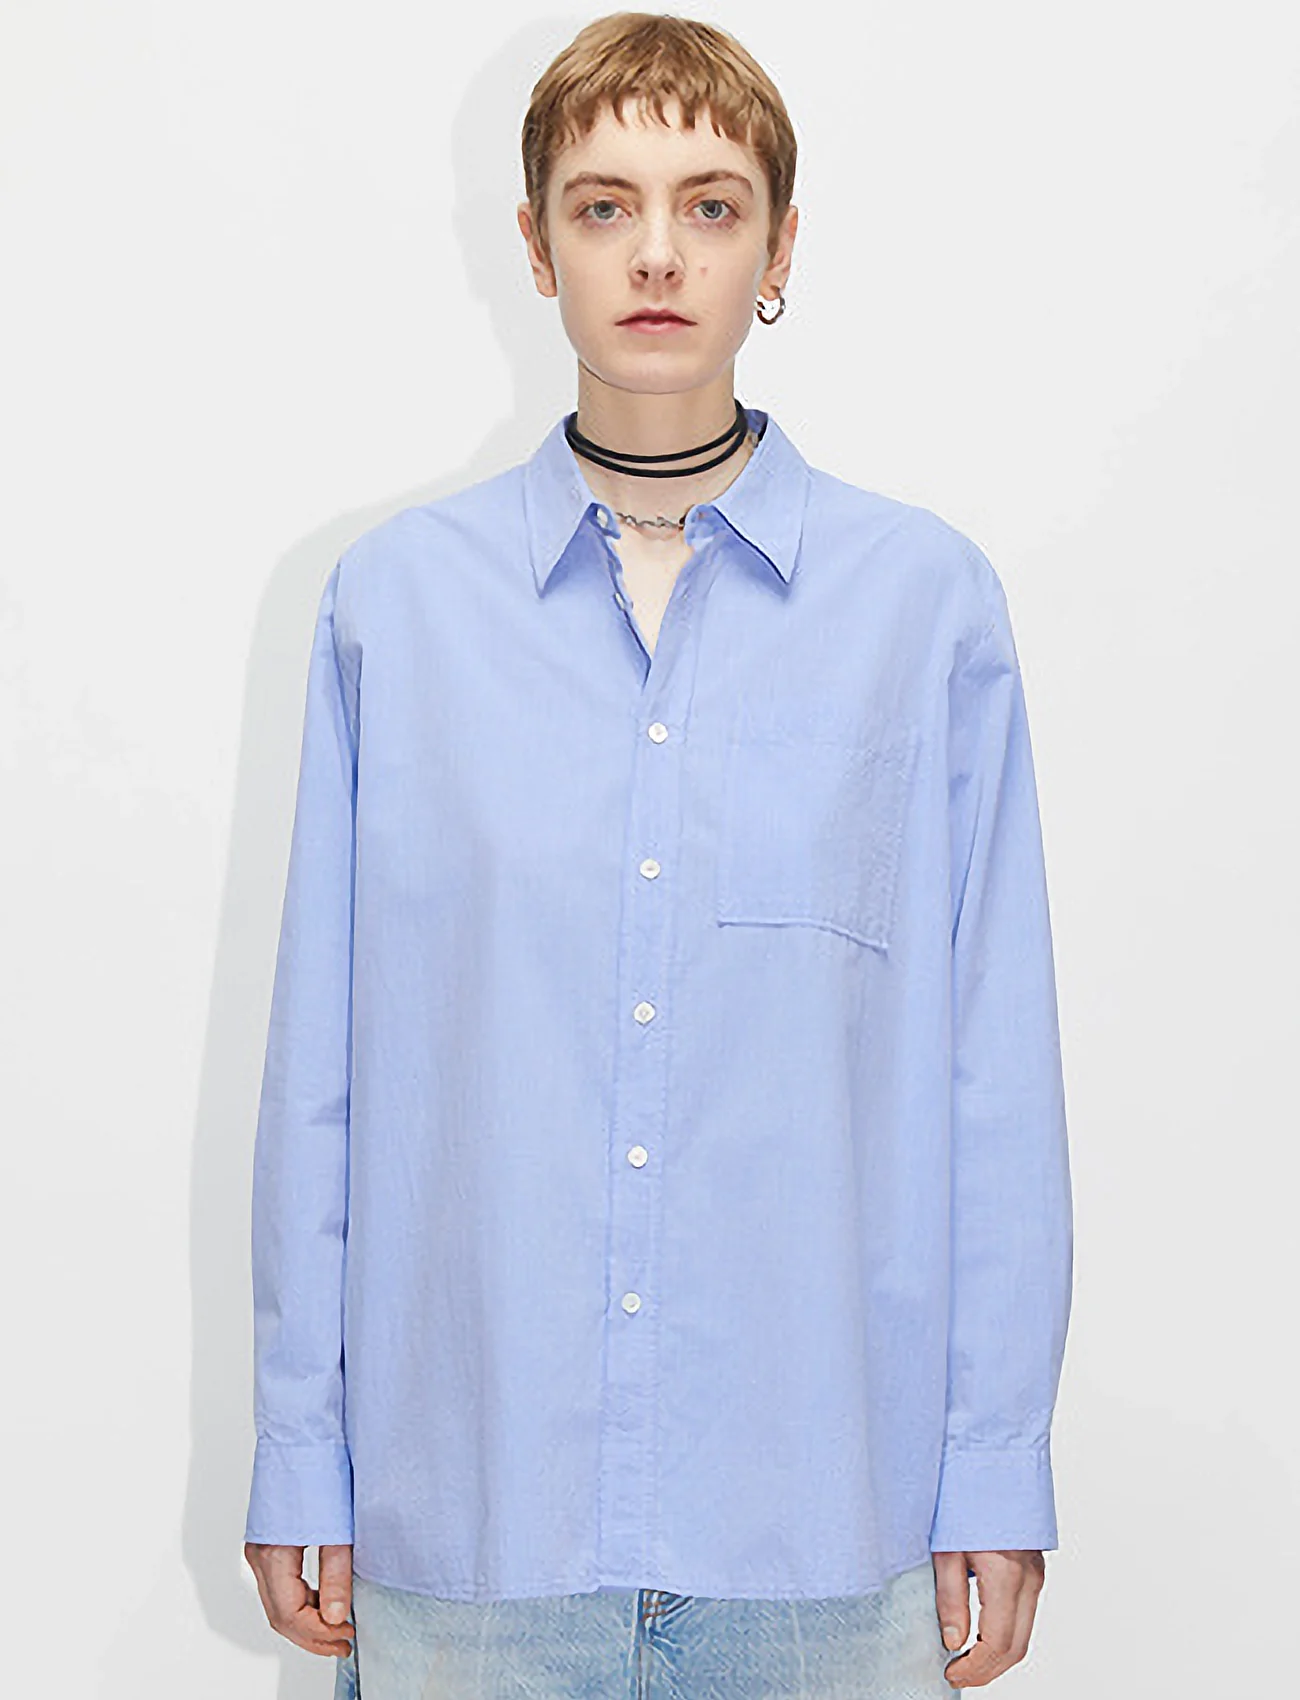 Hope - Elma Edit Shirt Mid Blue Micro Stripe - denimskjorter - mid blue micro stripe - 0